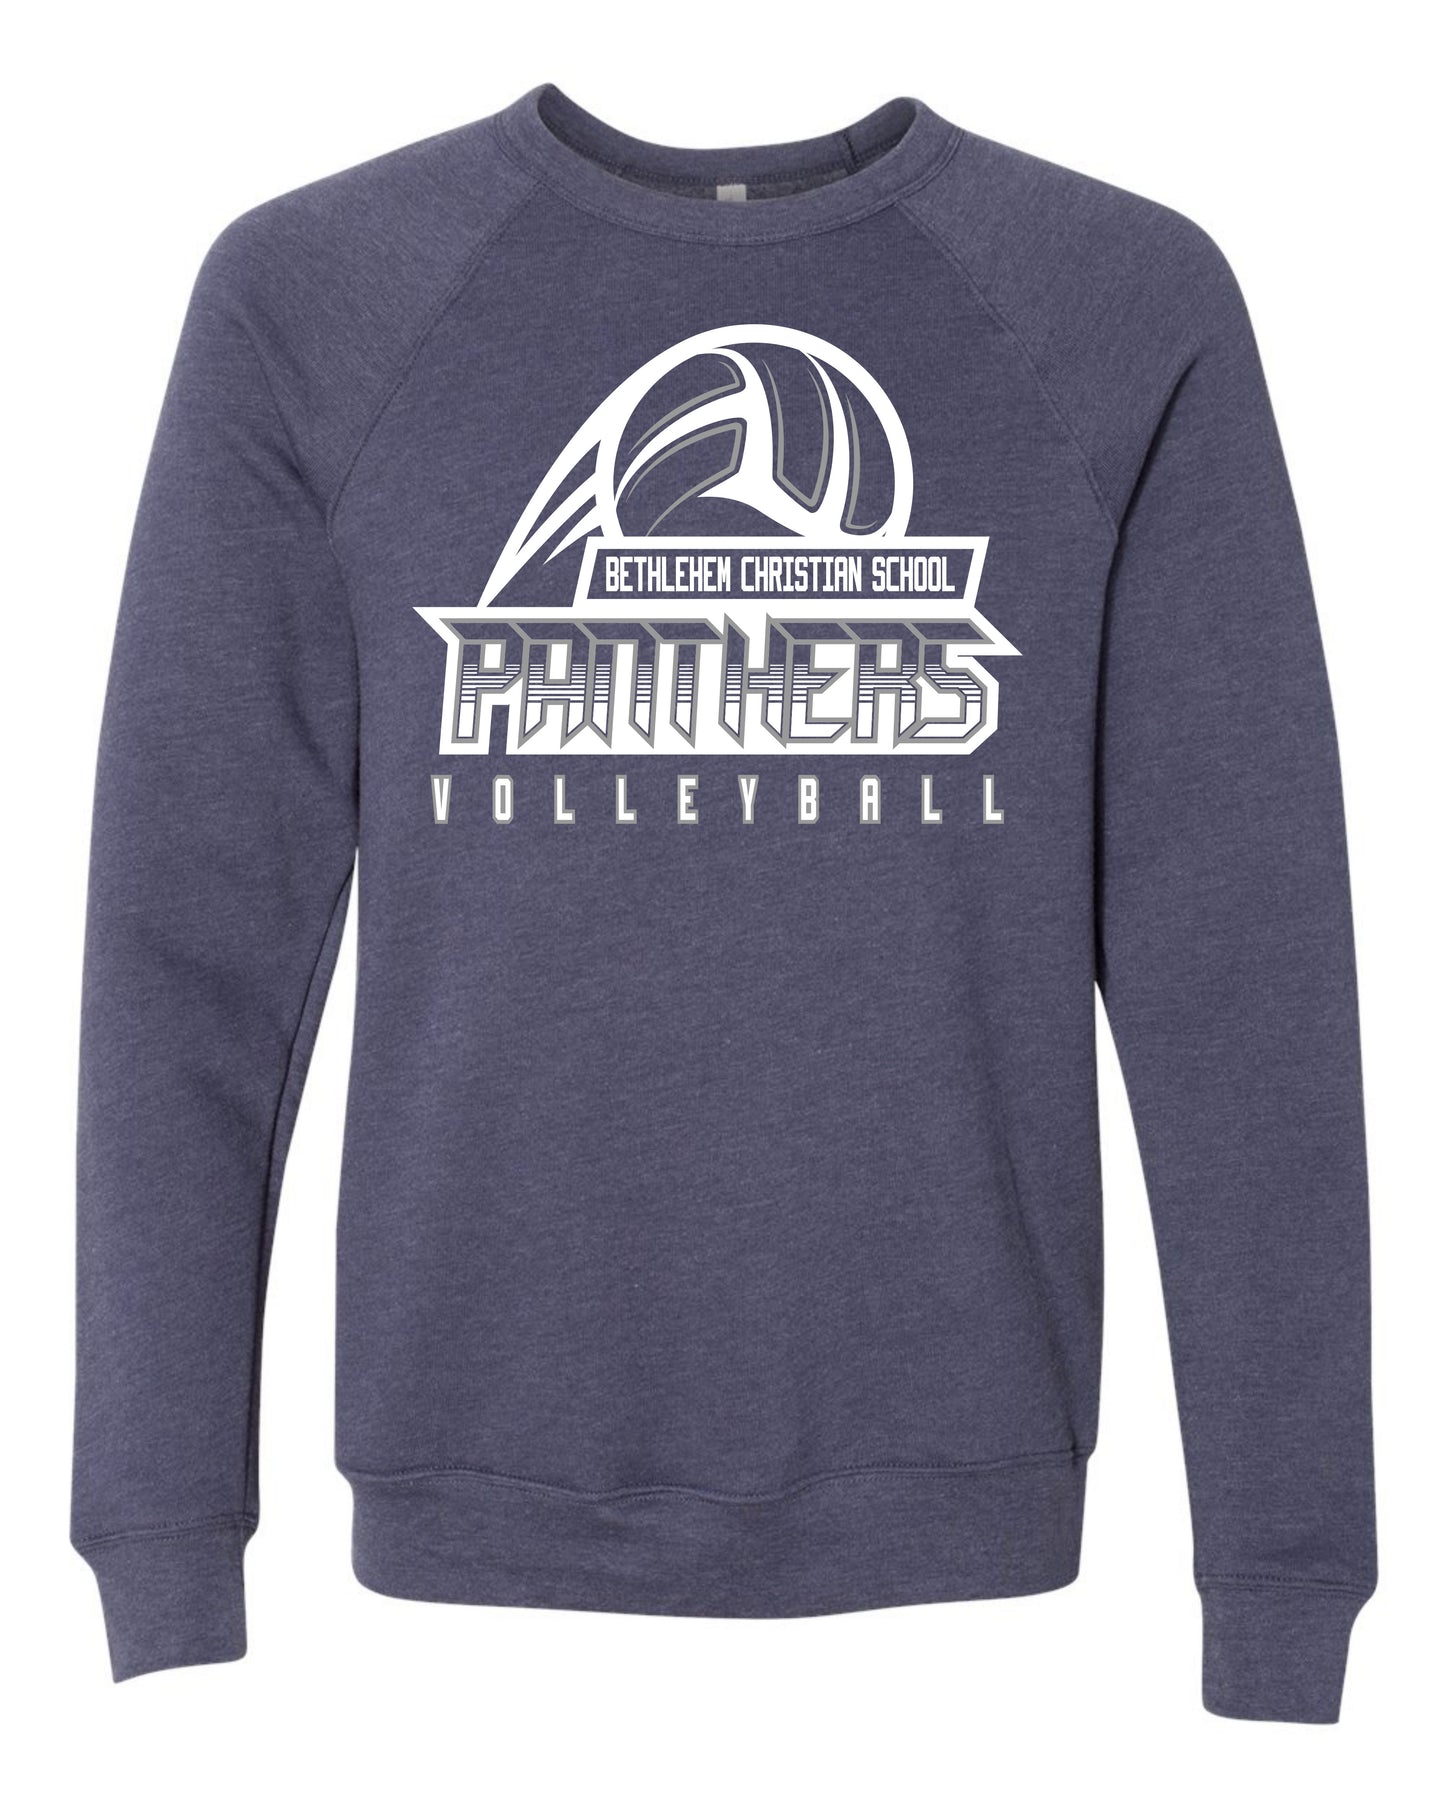 BCS Panthers Volleyball - Youth Sweatshirt